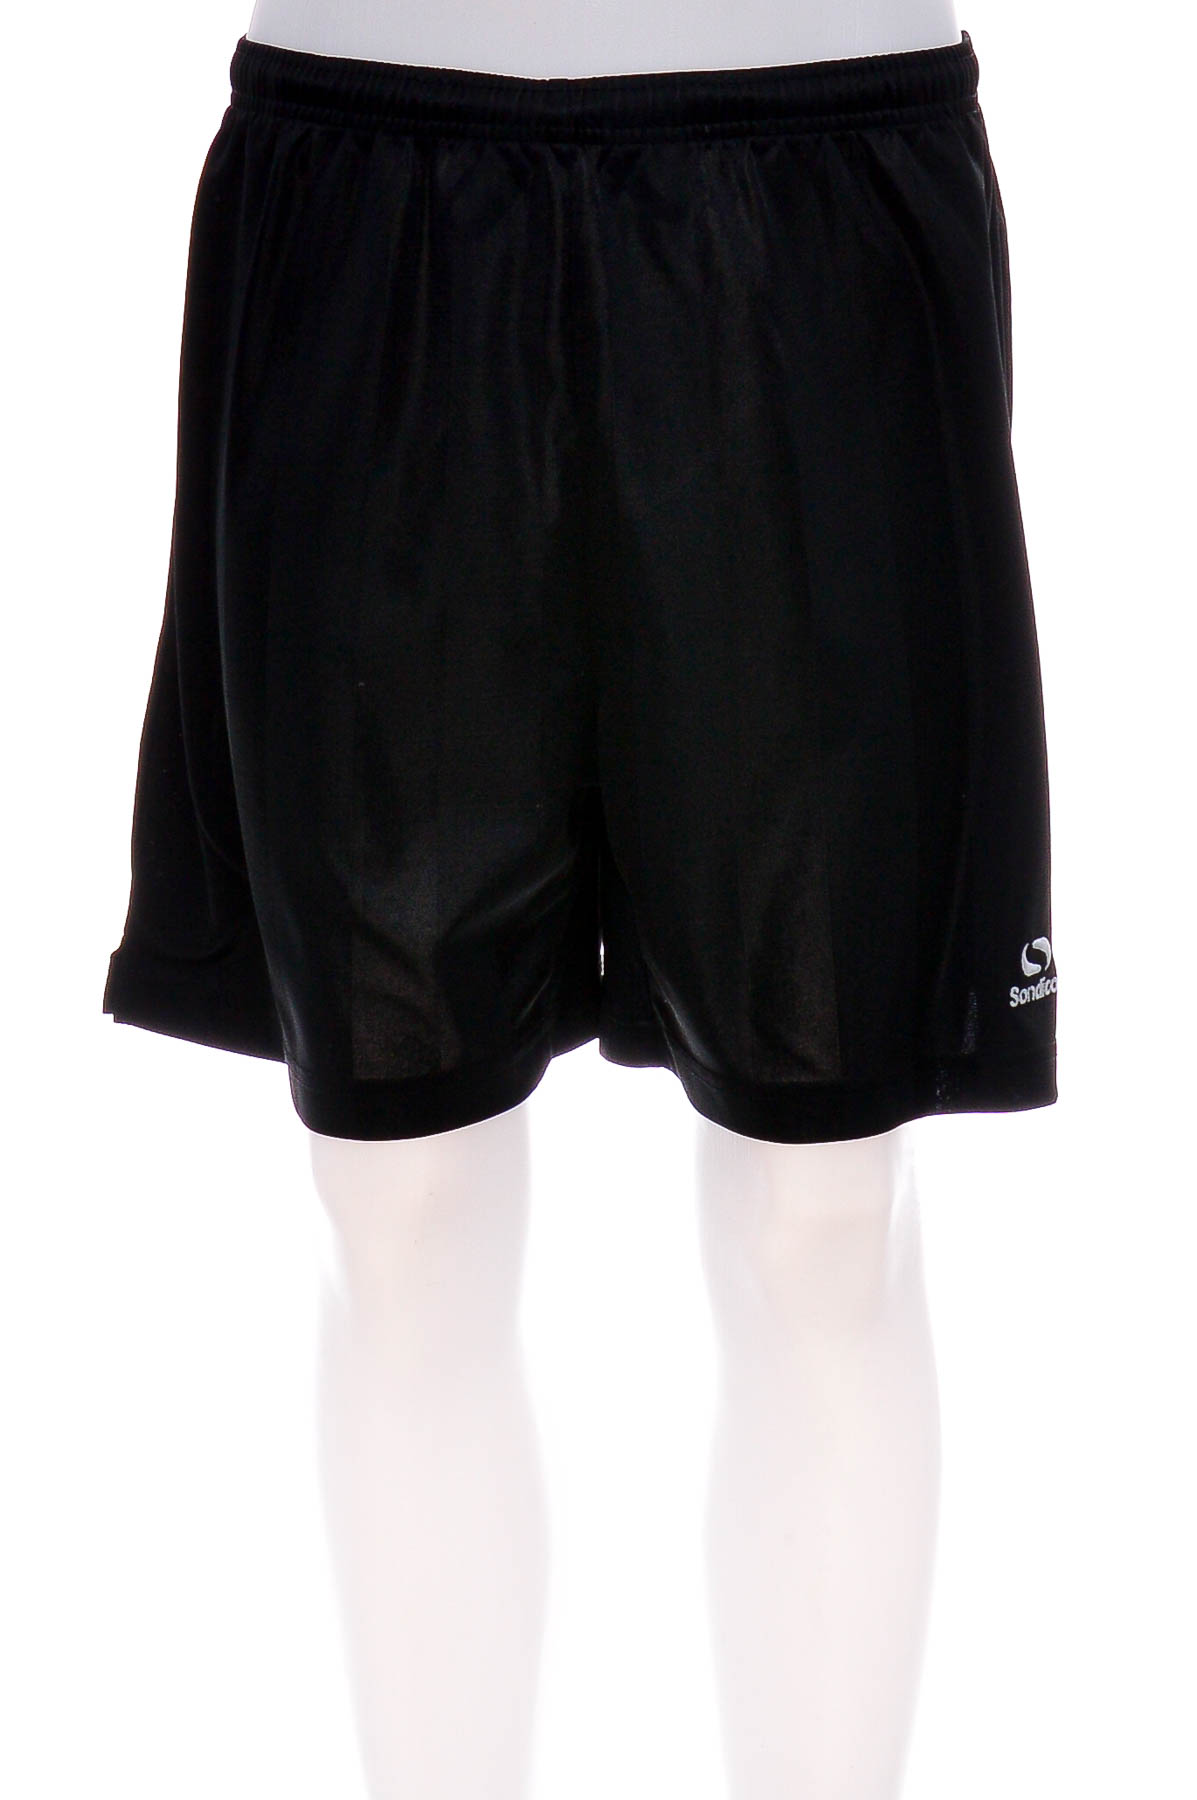 Men's shorts - Sandico - 0